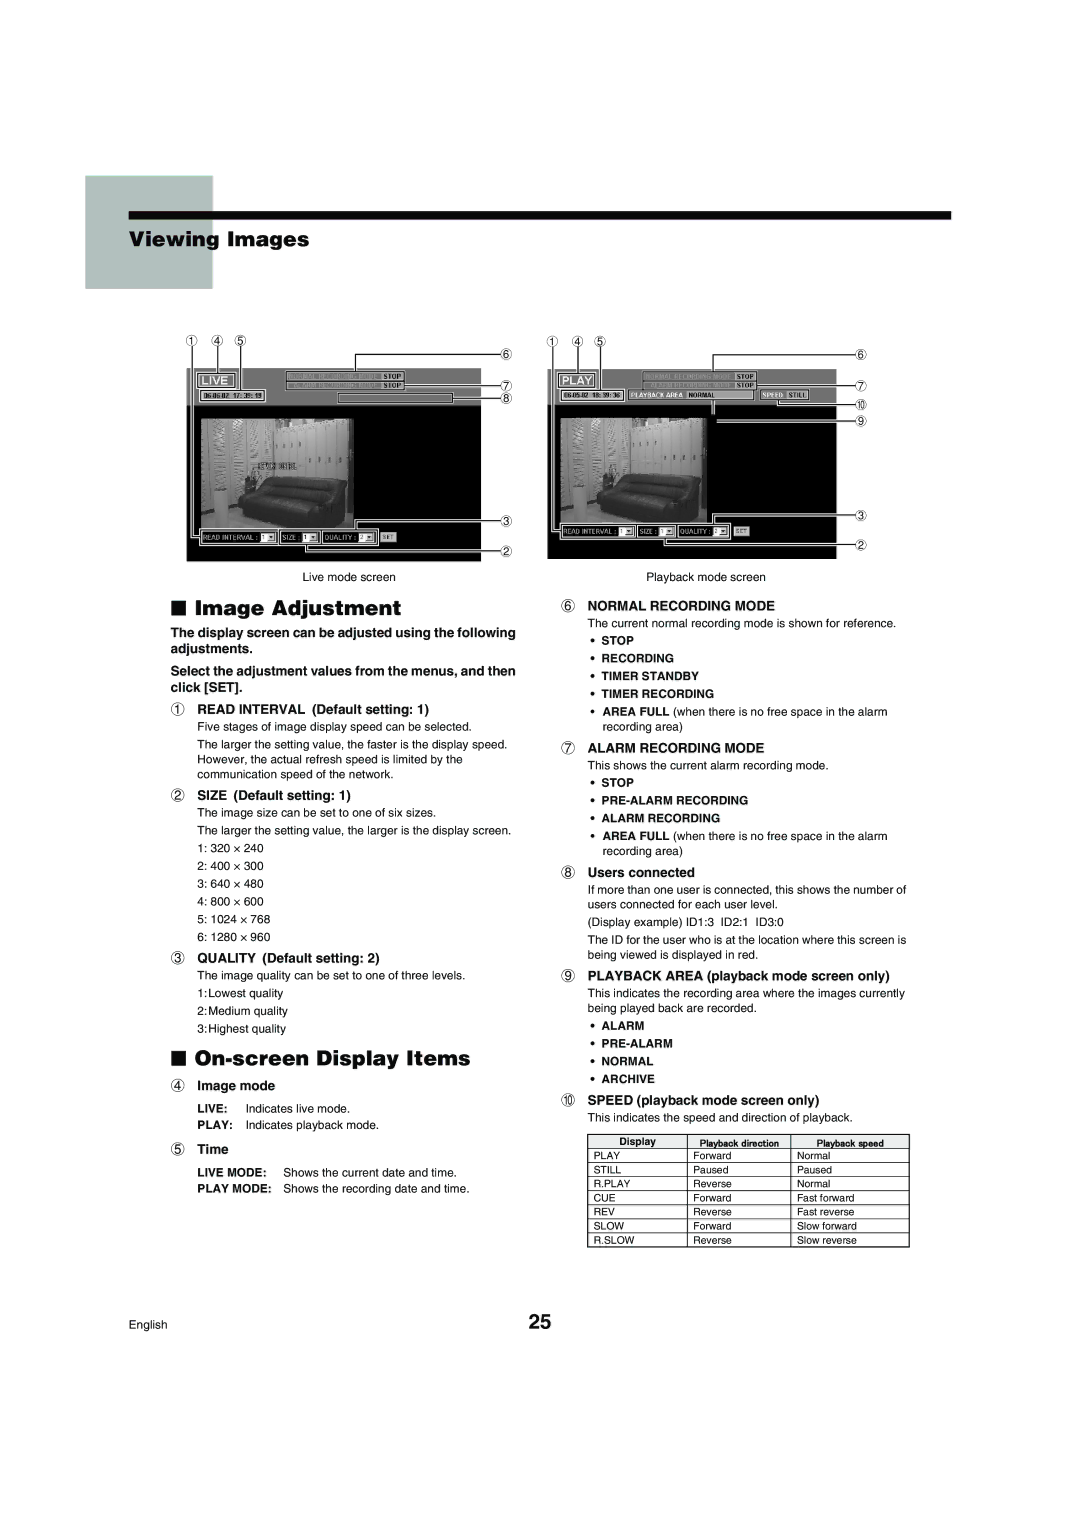 Sanyo DSR-3009 manual Image Adjustment, On-screen Display Items 